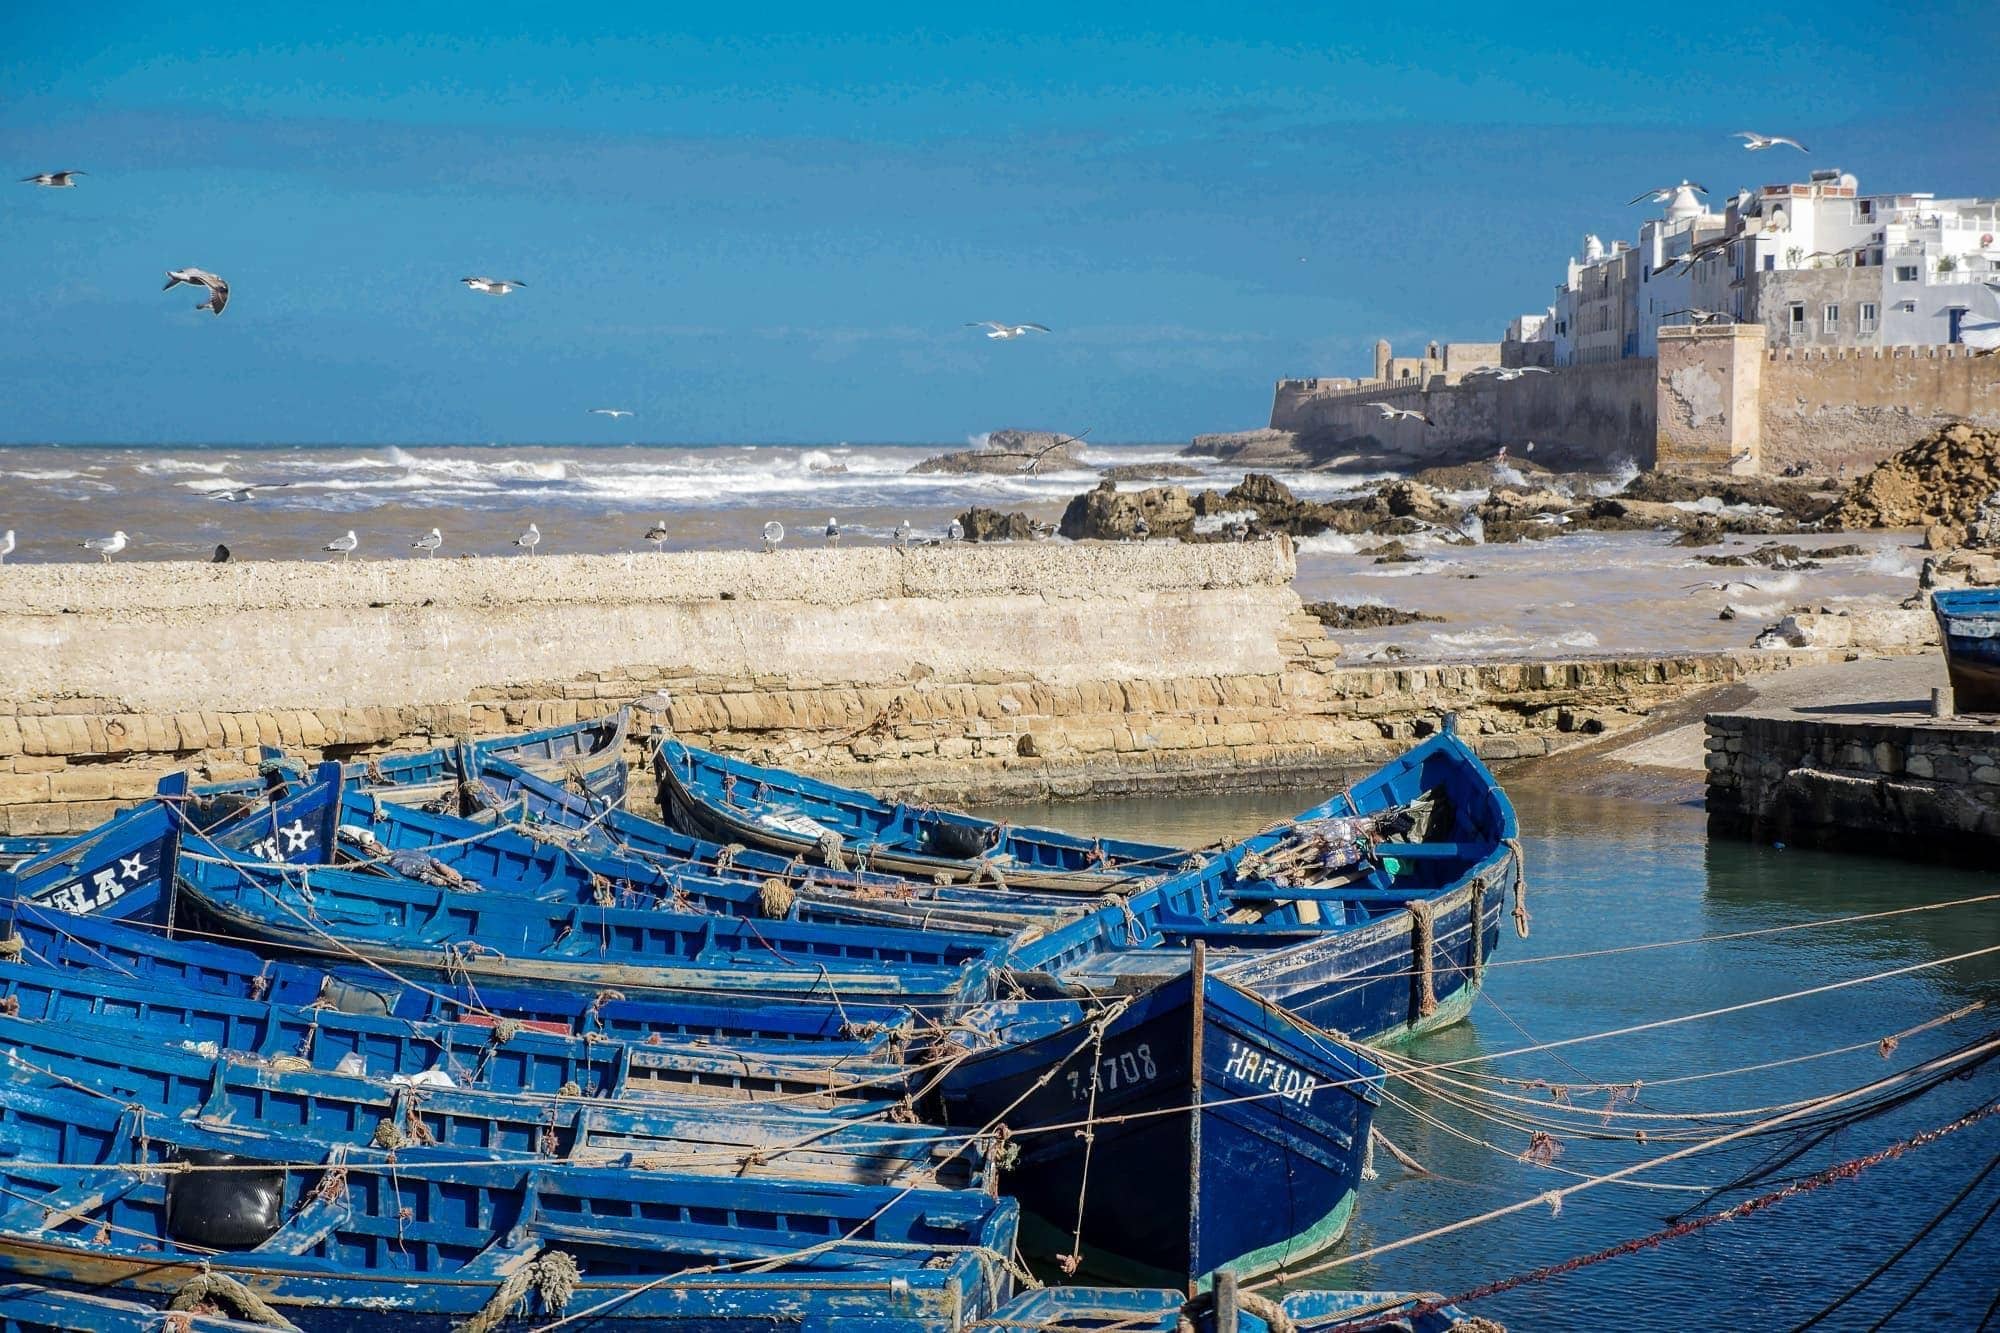 Fishing boats Essaouira game of thrones image